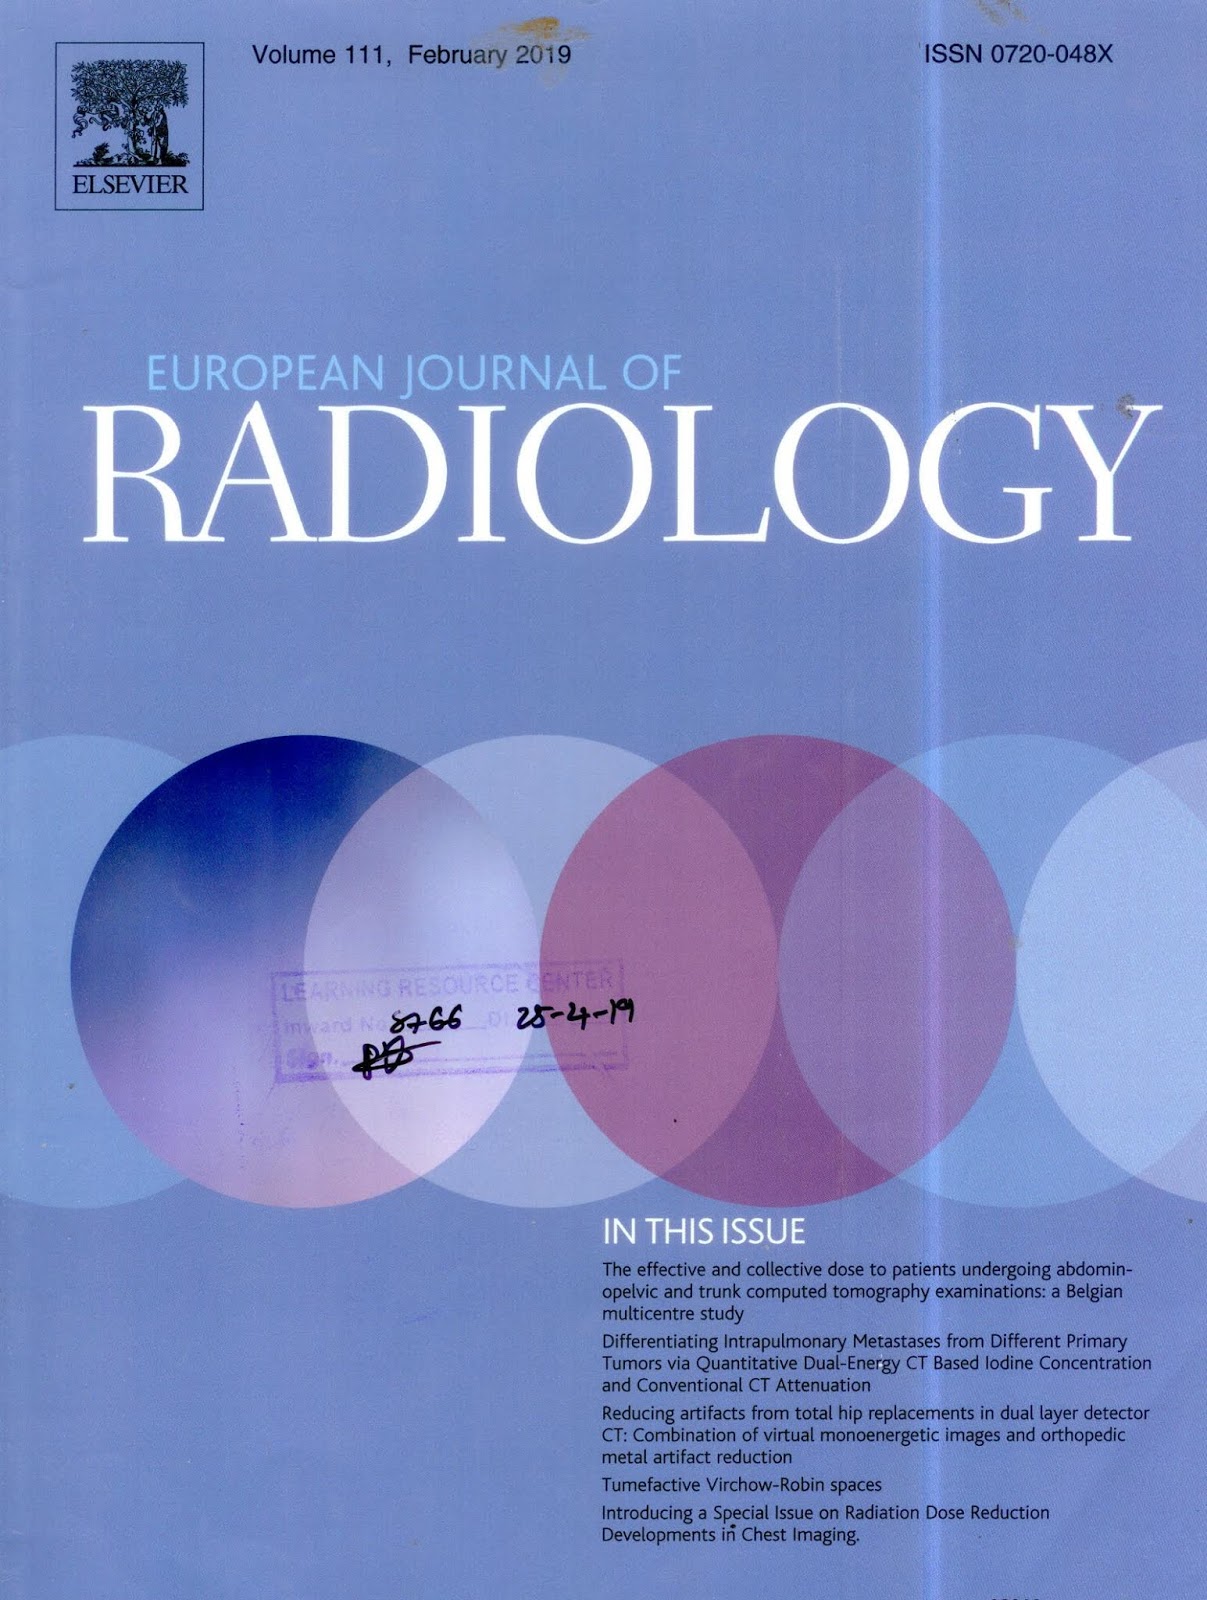 https://www.sciencedirect.com/journal/european-journal-of-radiology/vol/111/suppl/C